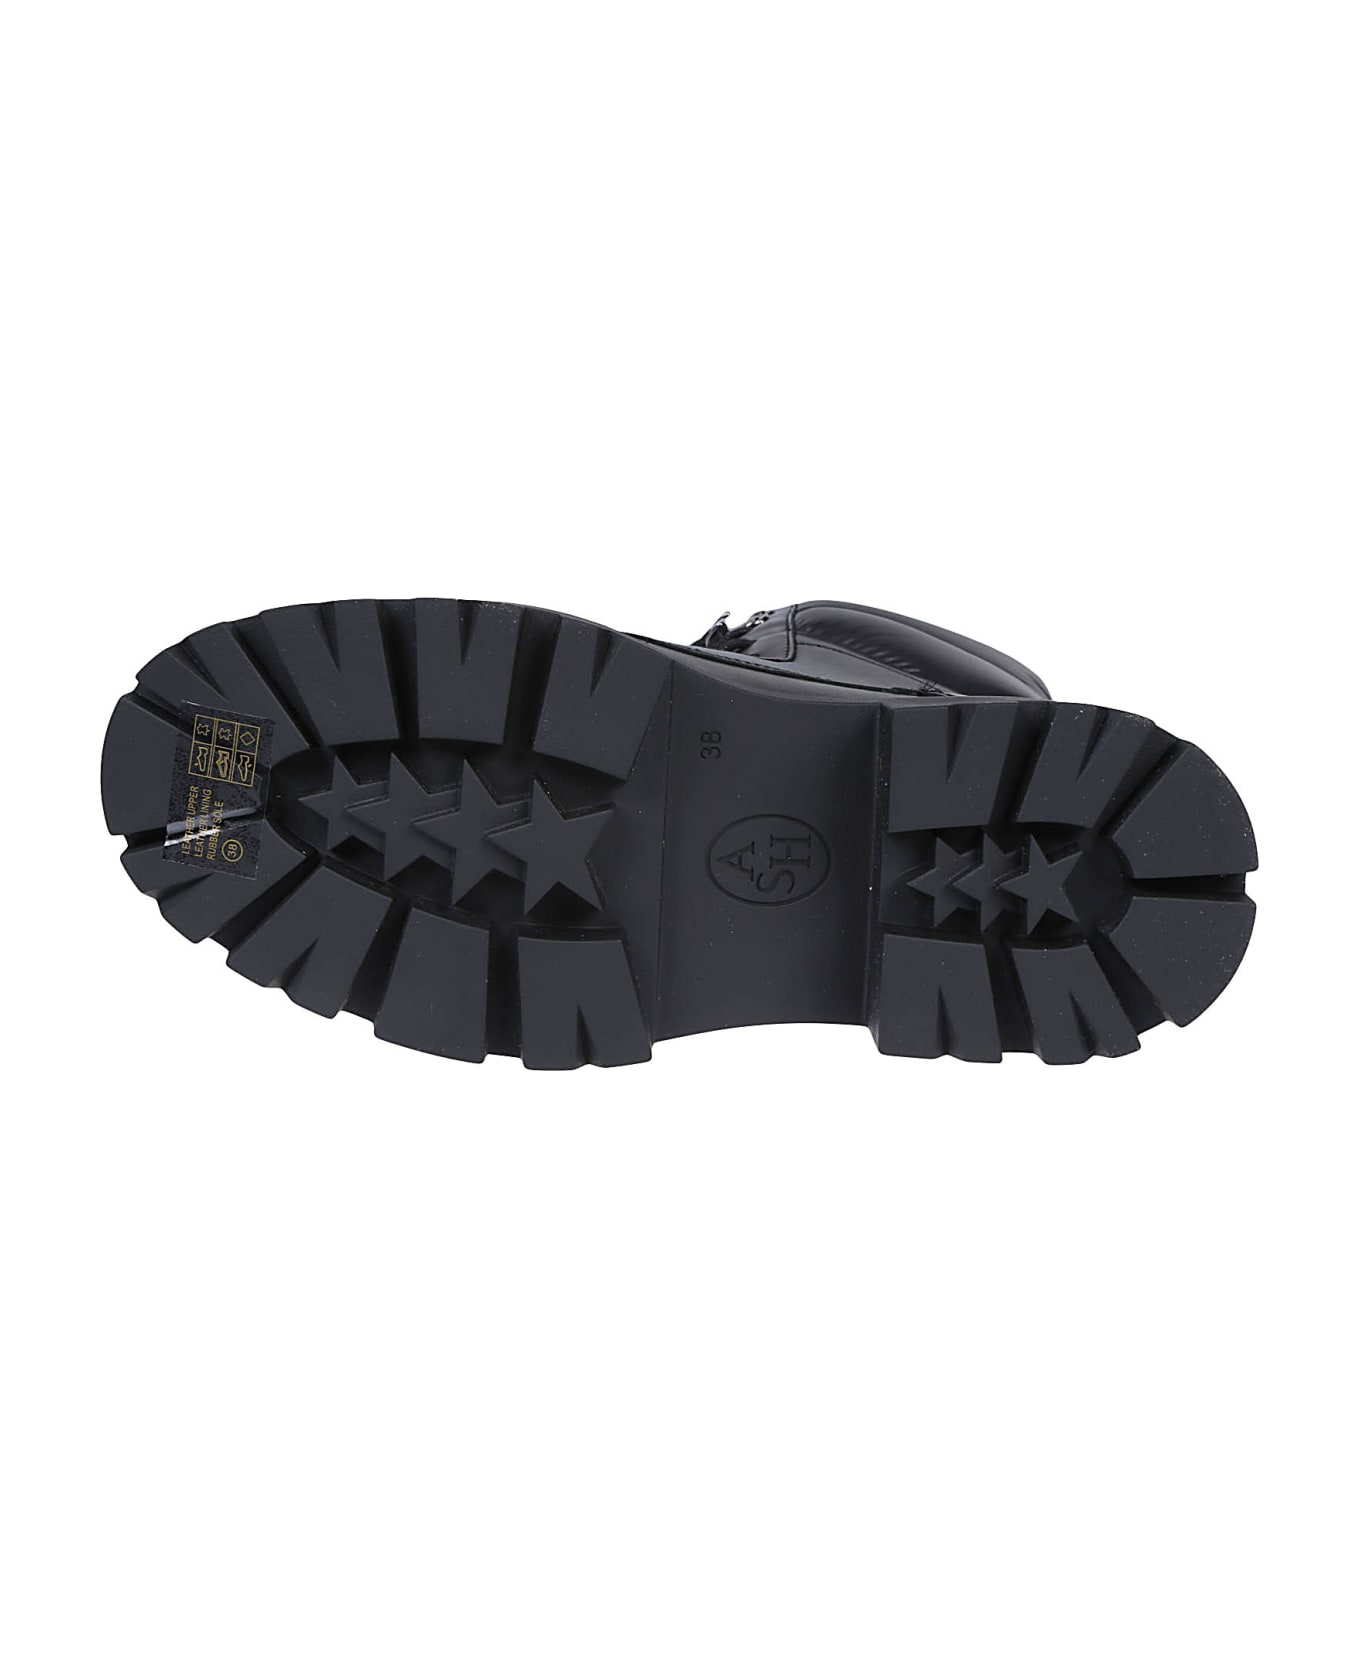 Ash Gotta Combat Ankle Boots - Black/shinypuffy Black ブーツ